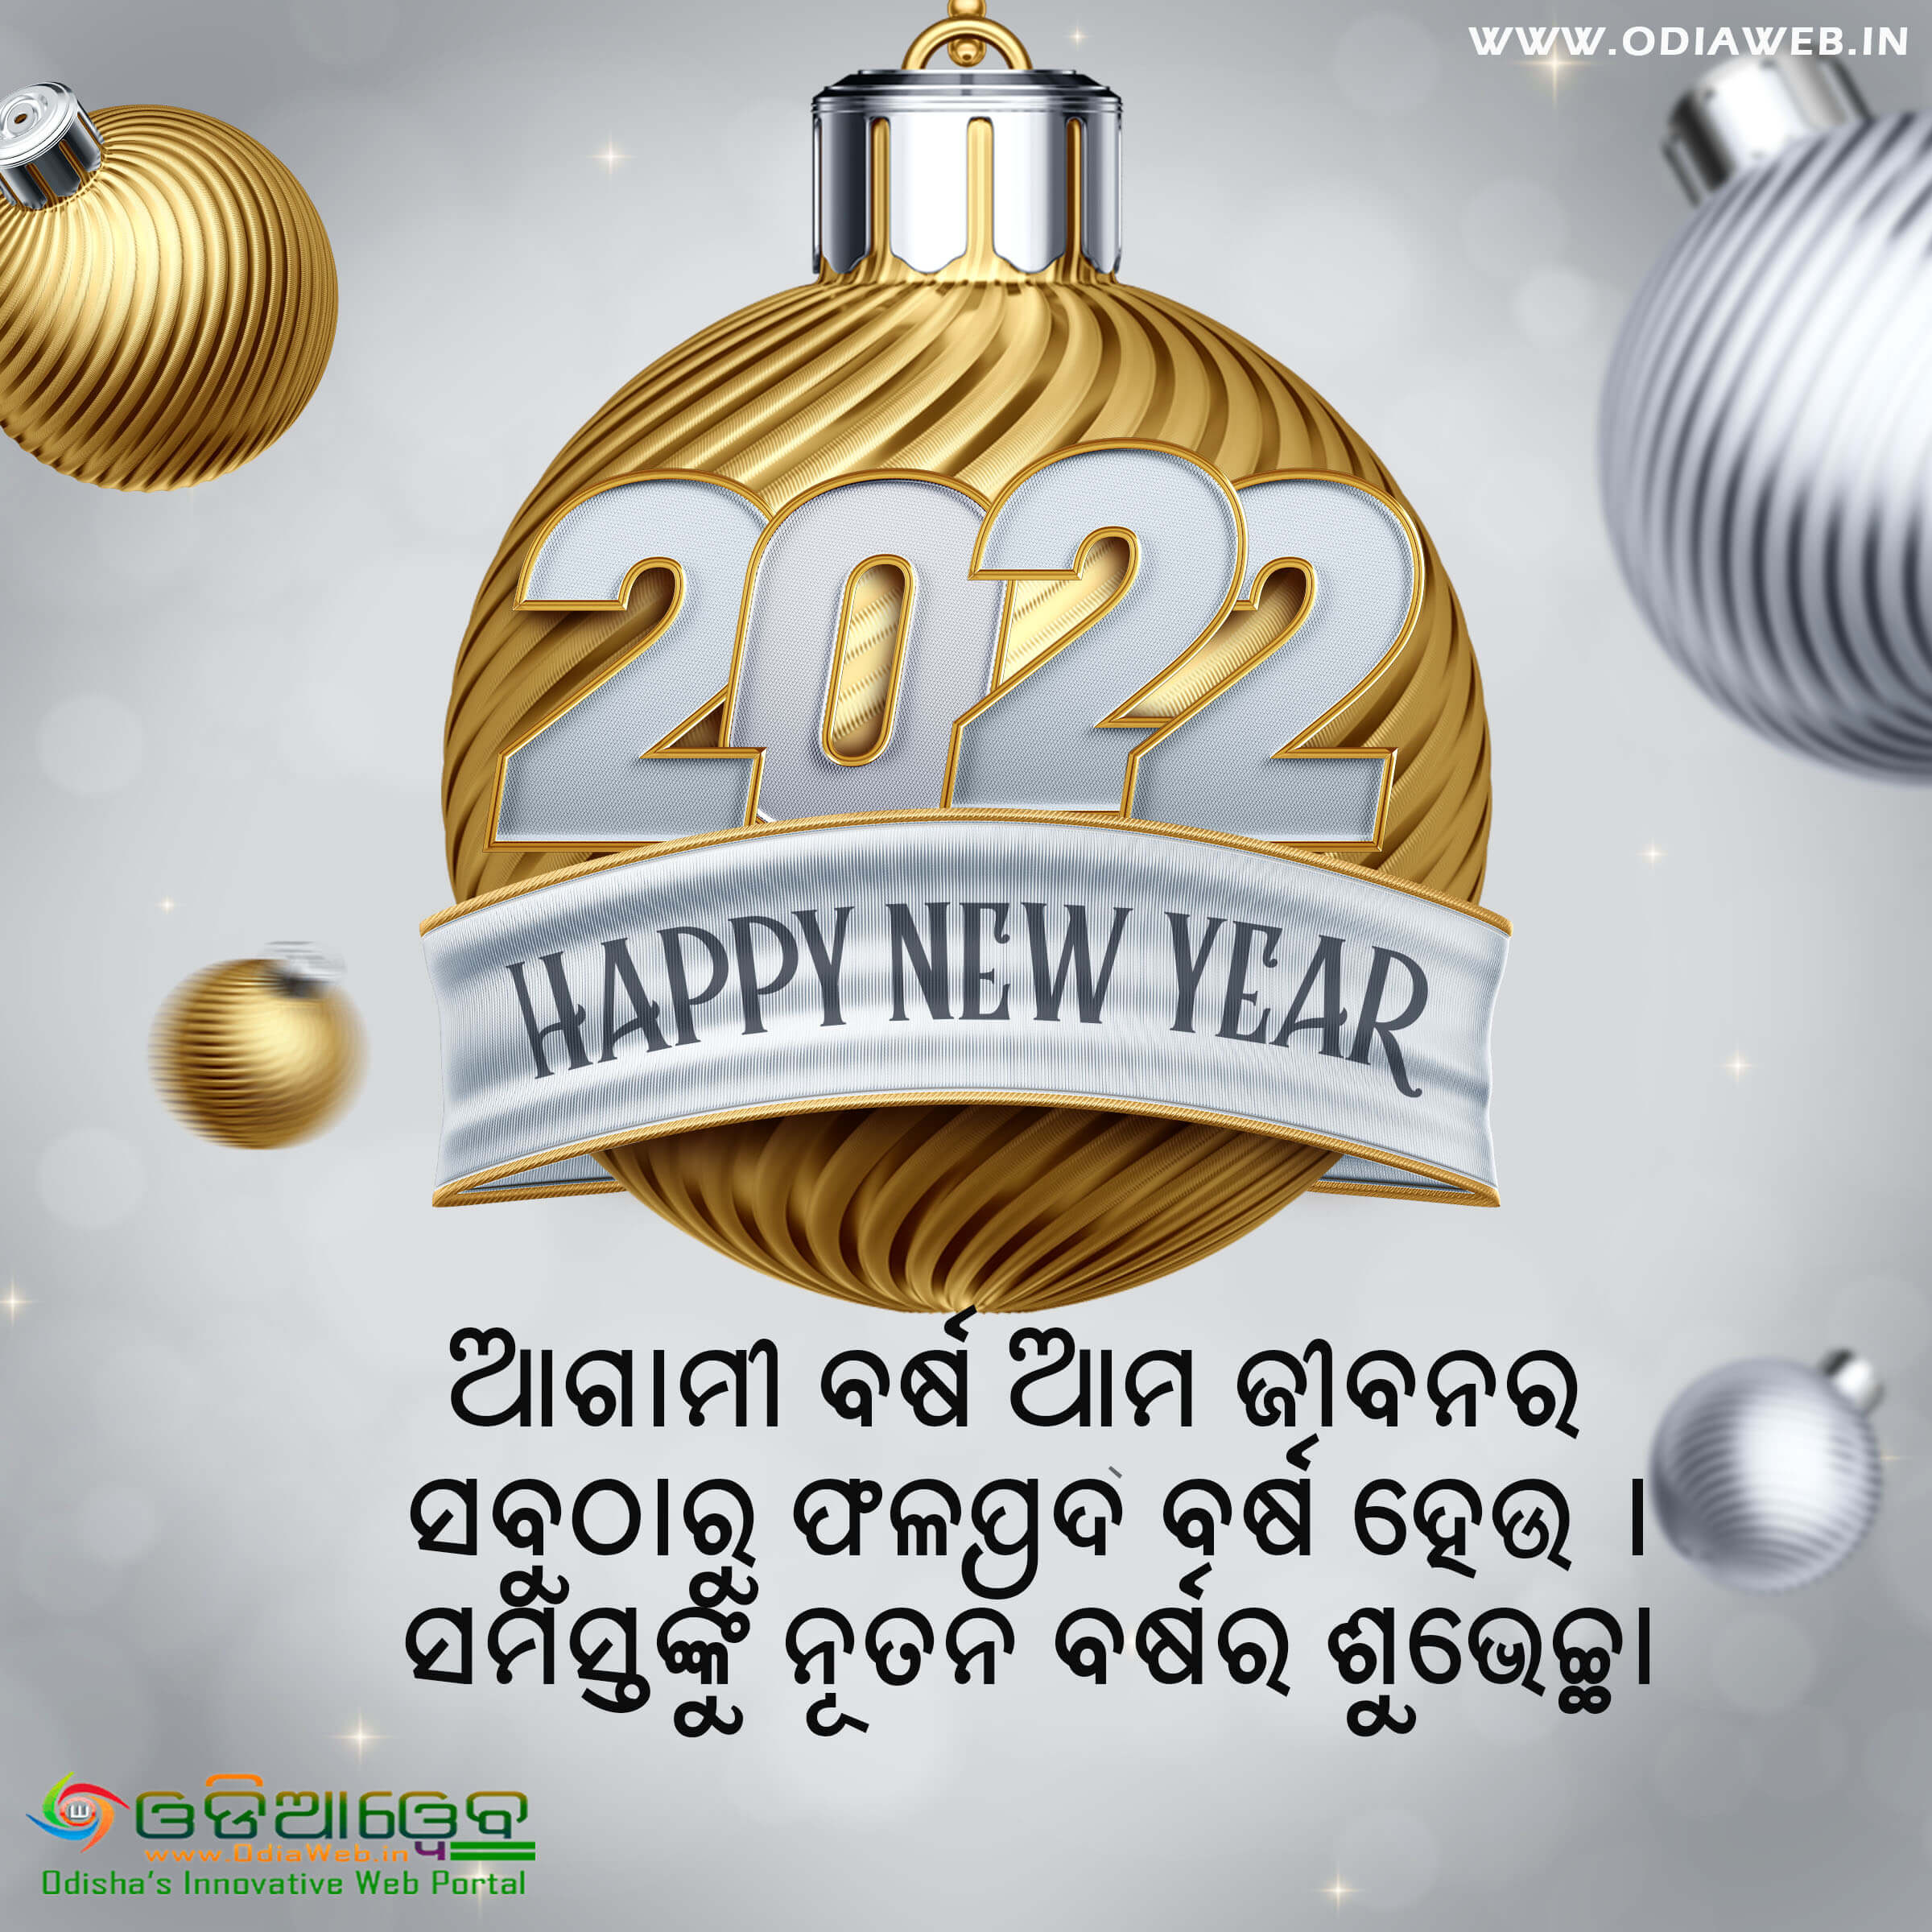 Happy New Year 2022 Wishes8 in Odia